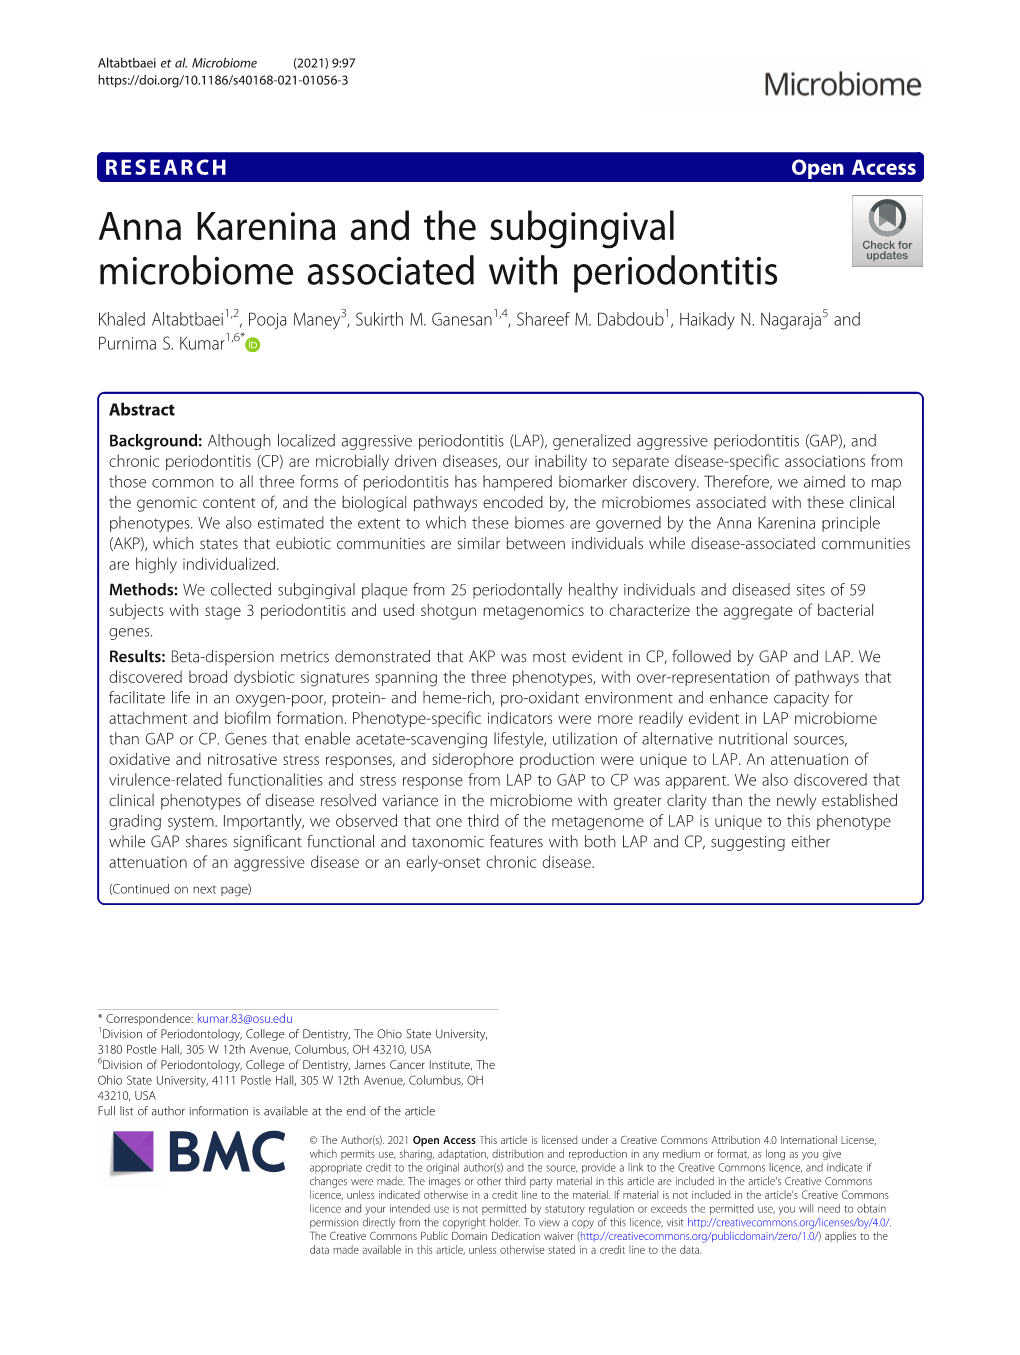 Anna Karenina and the Subgingival Microbiome Associated with Periodontitis Khaled Altabtbaei1,2, Pooja Maney3, Sukirth M